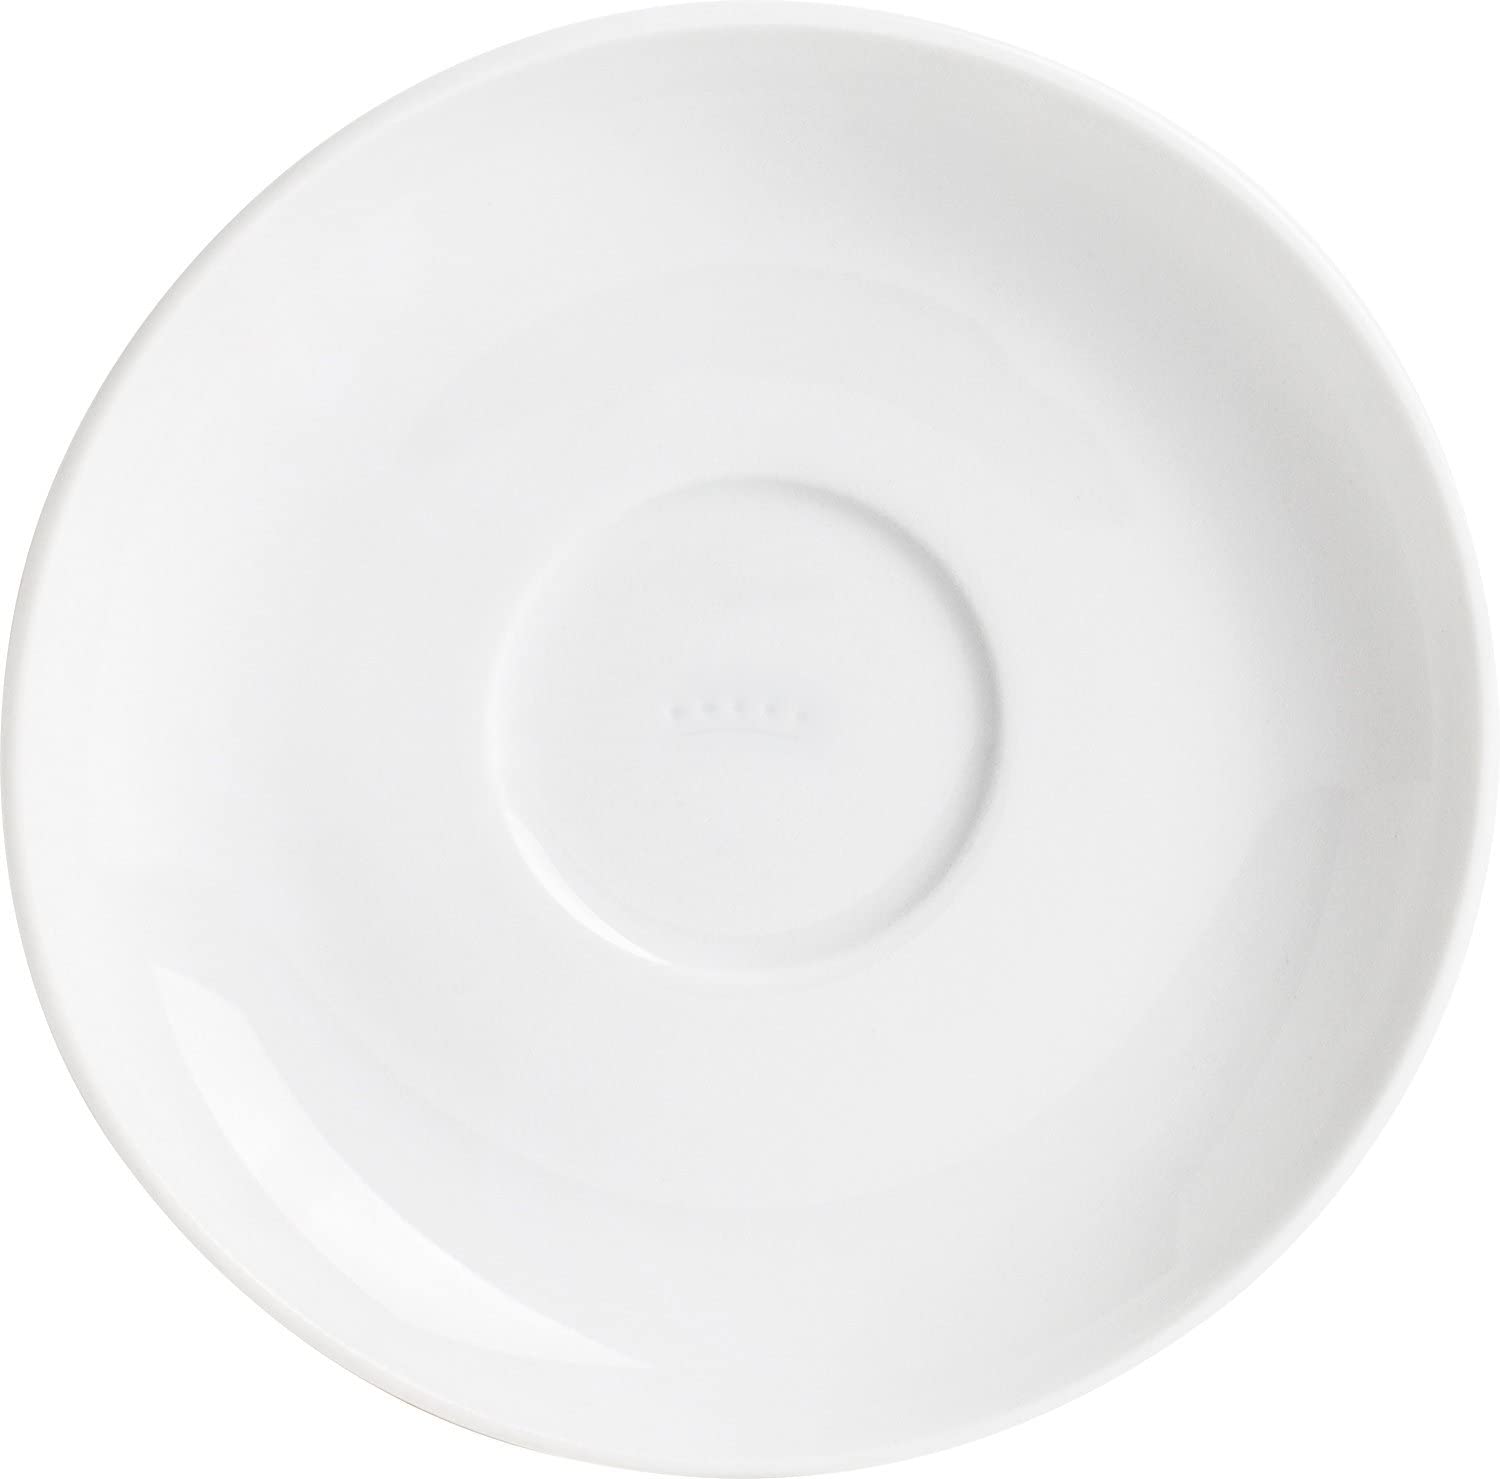 Kahla 553501 a90055b Saucer Diner 12 cm White